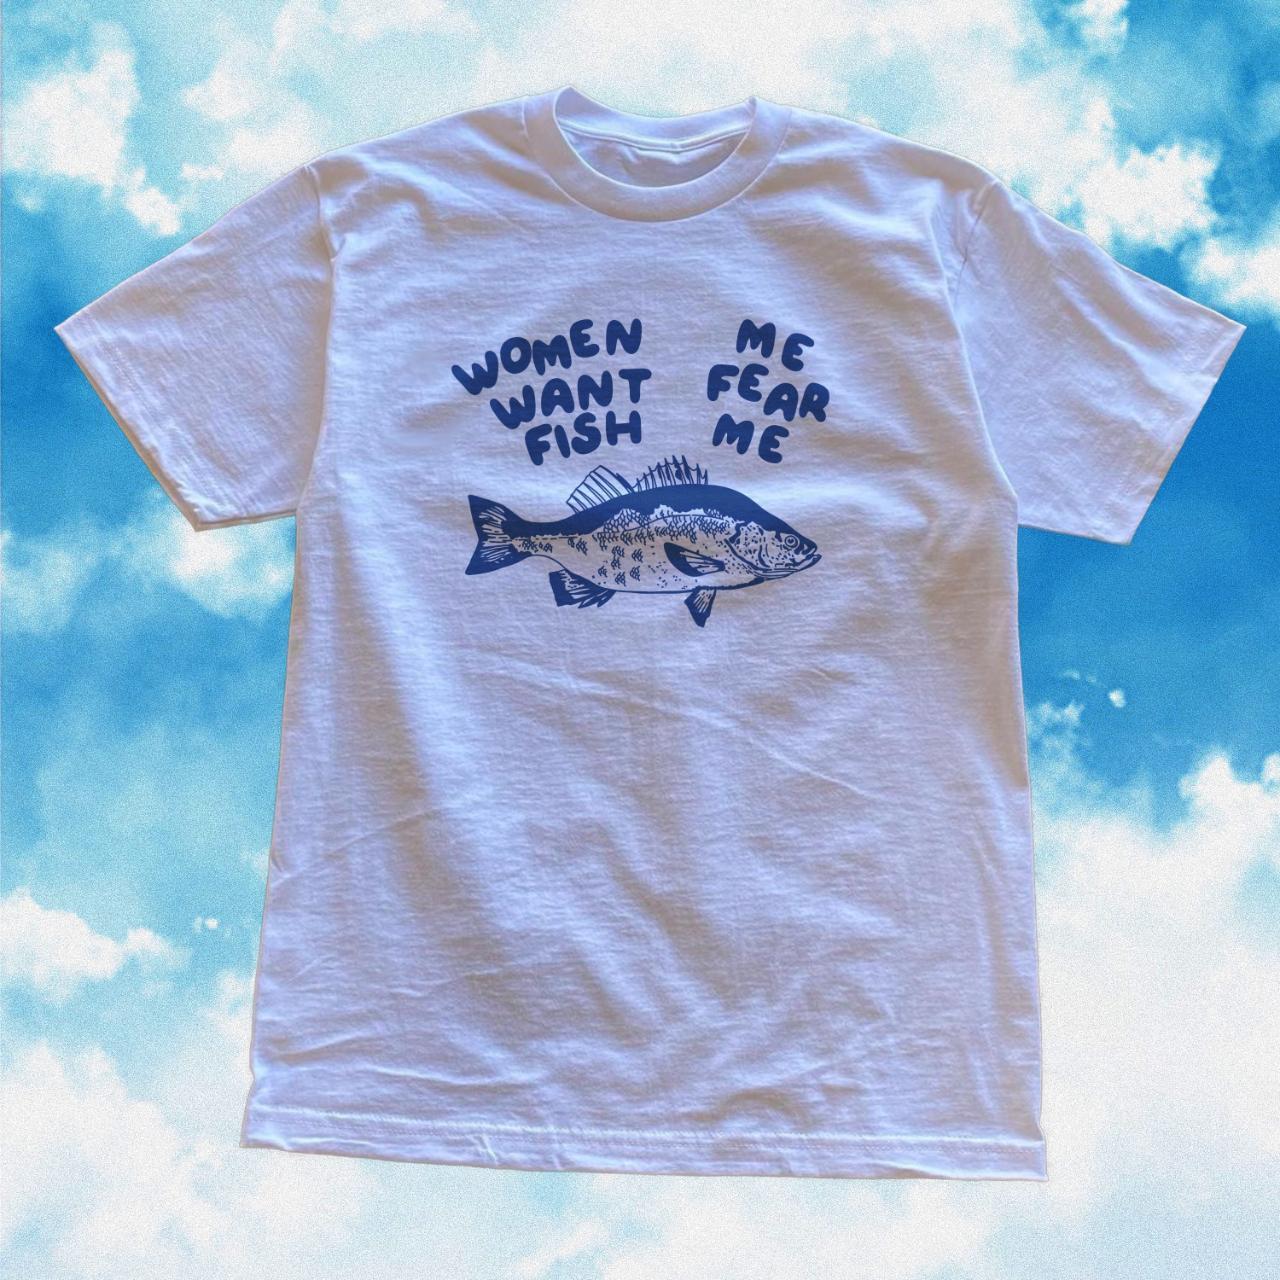 Women Want Fish Me Fear Me Shirt is a funny meme - Depop